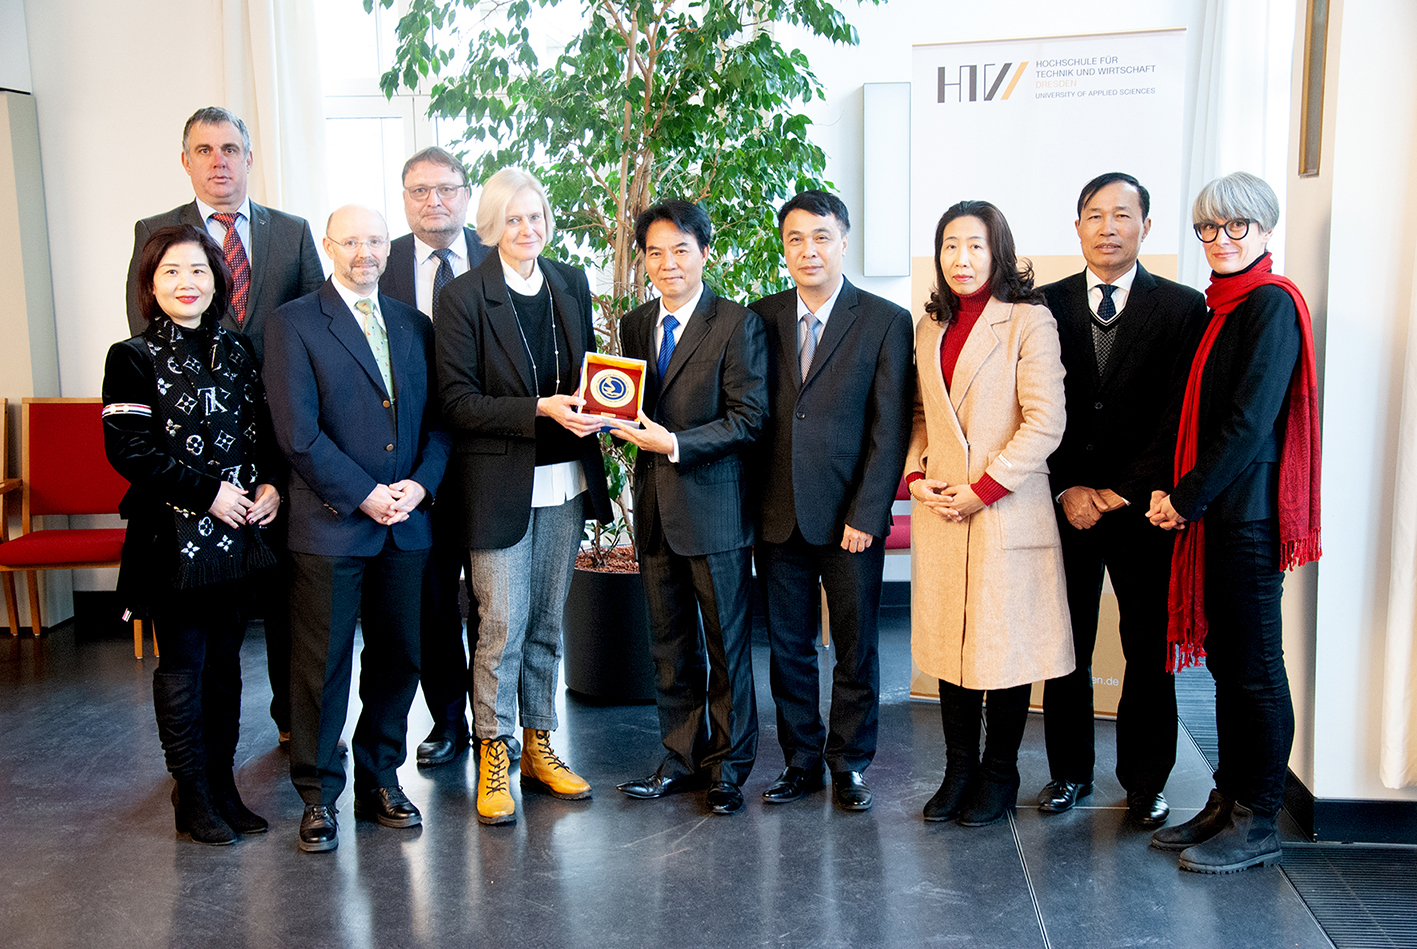 Representatives of the University of Transport and Communication (UTC) in Vietnam visited HTW Dresden